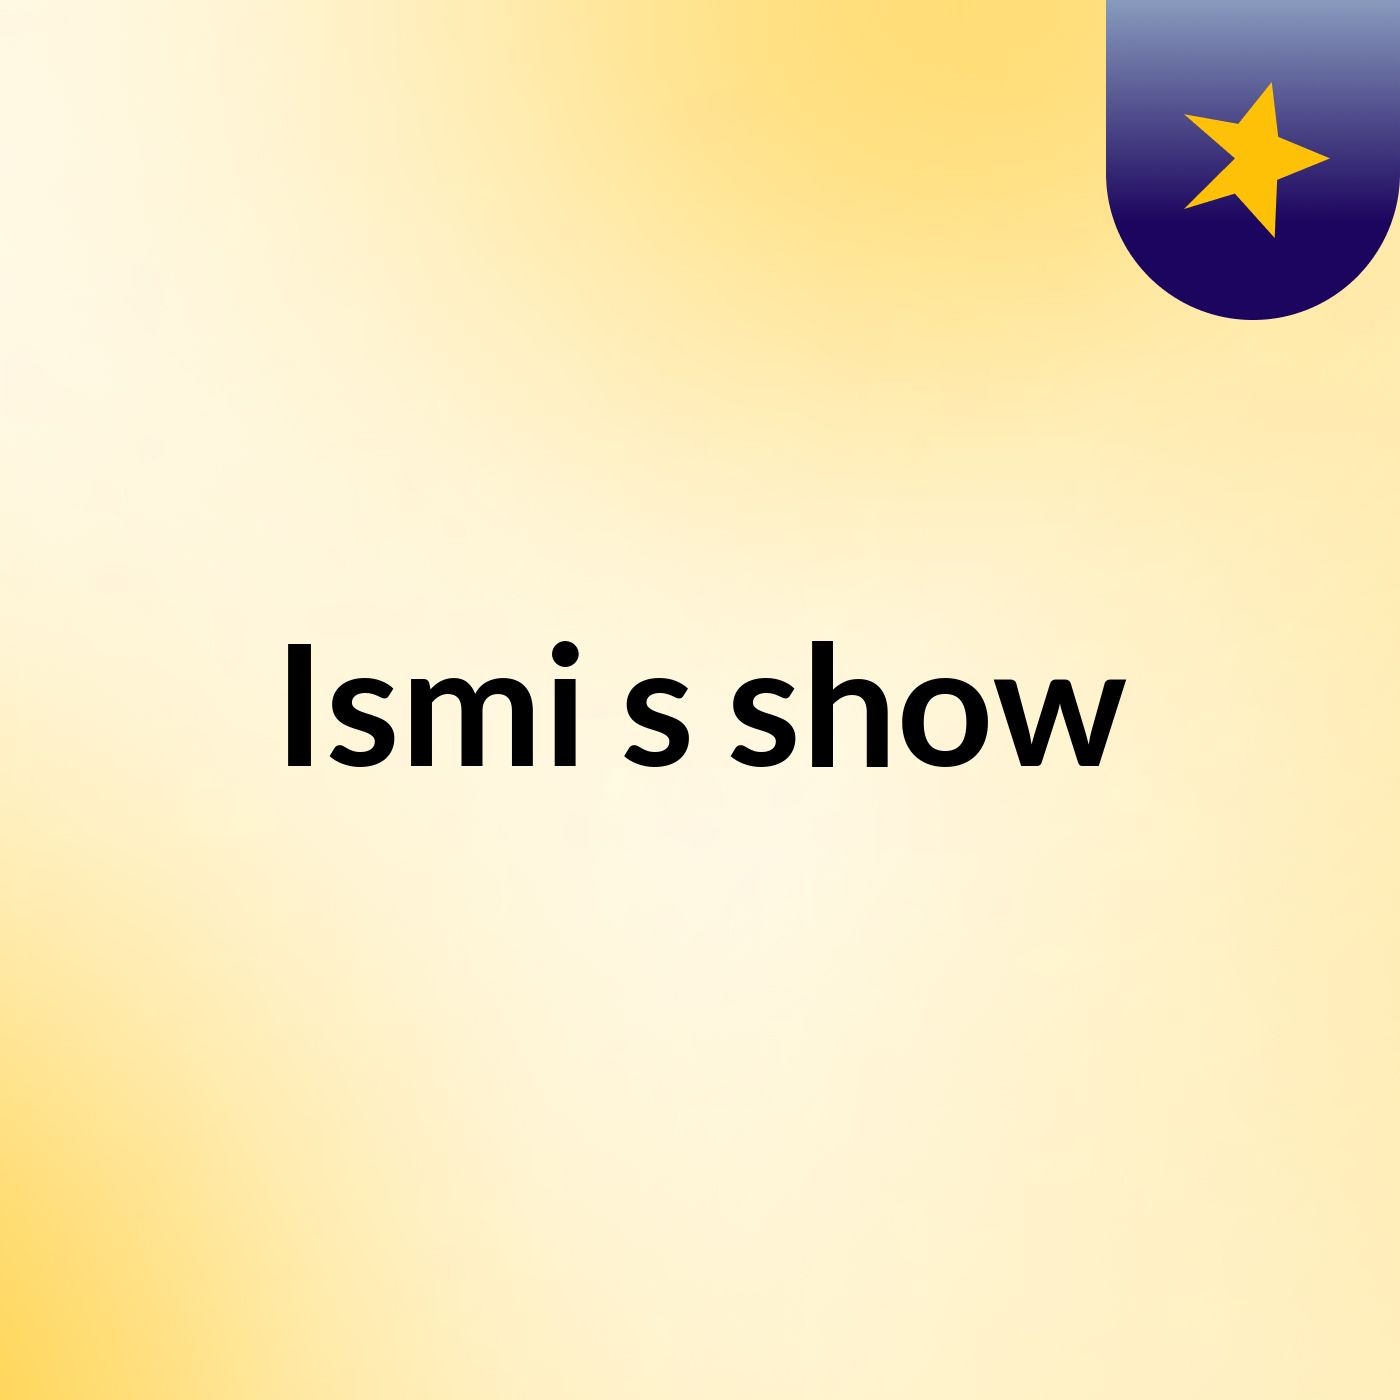 Ismi's show